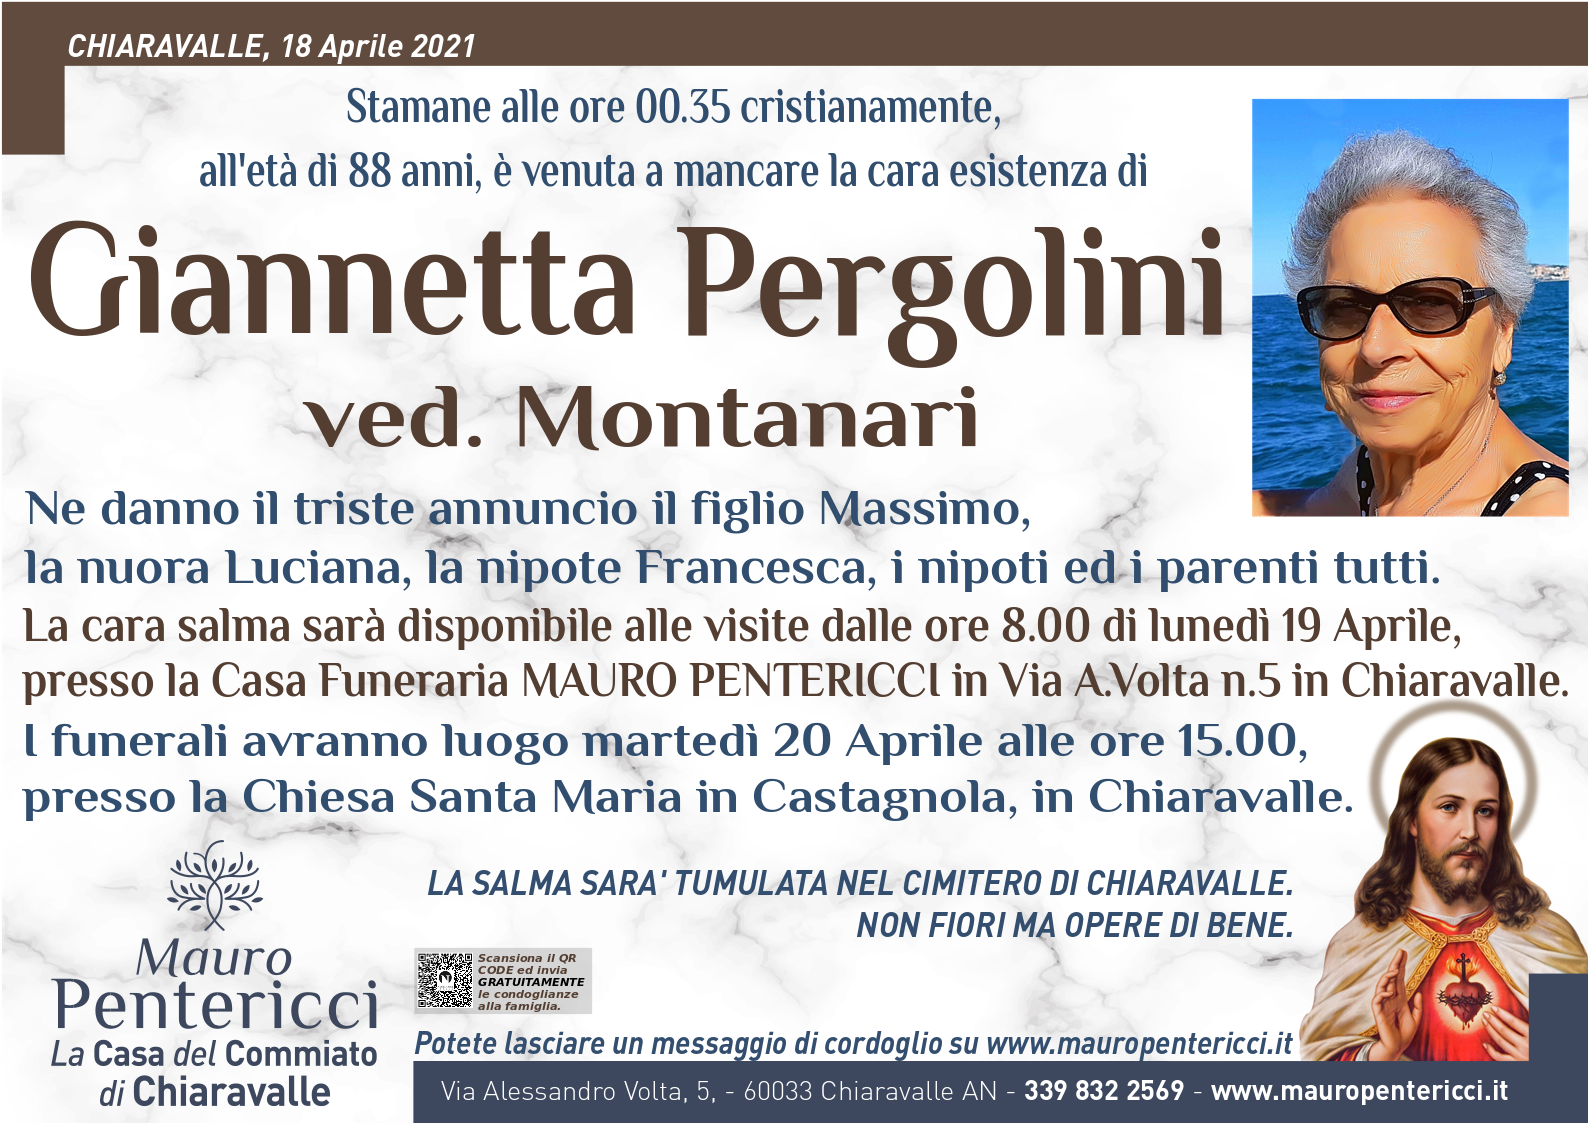 Giannetta Pergolini